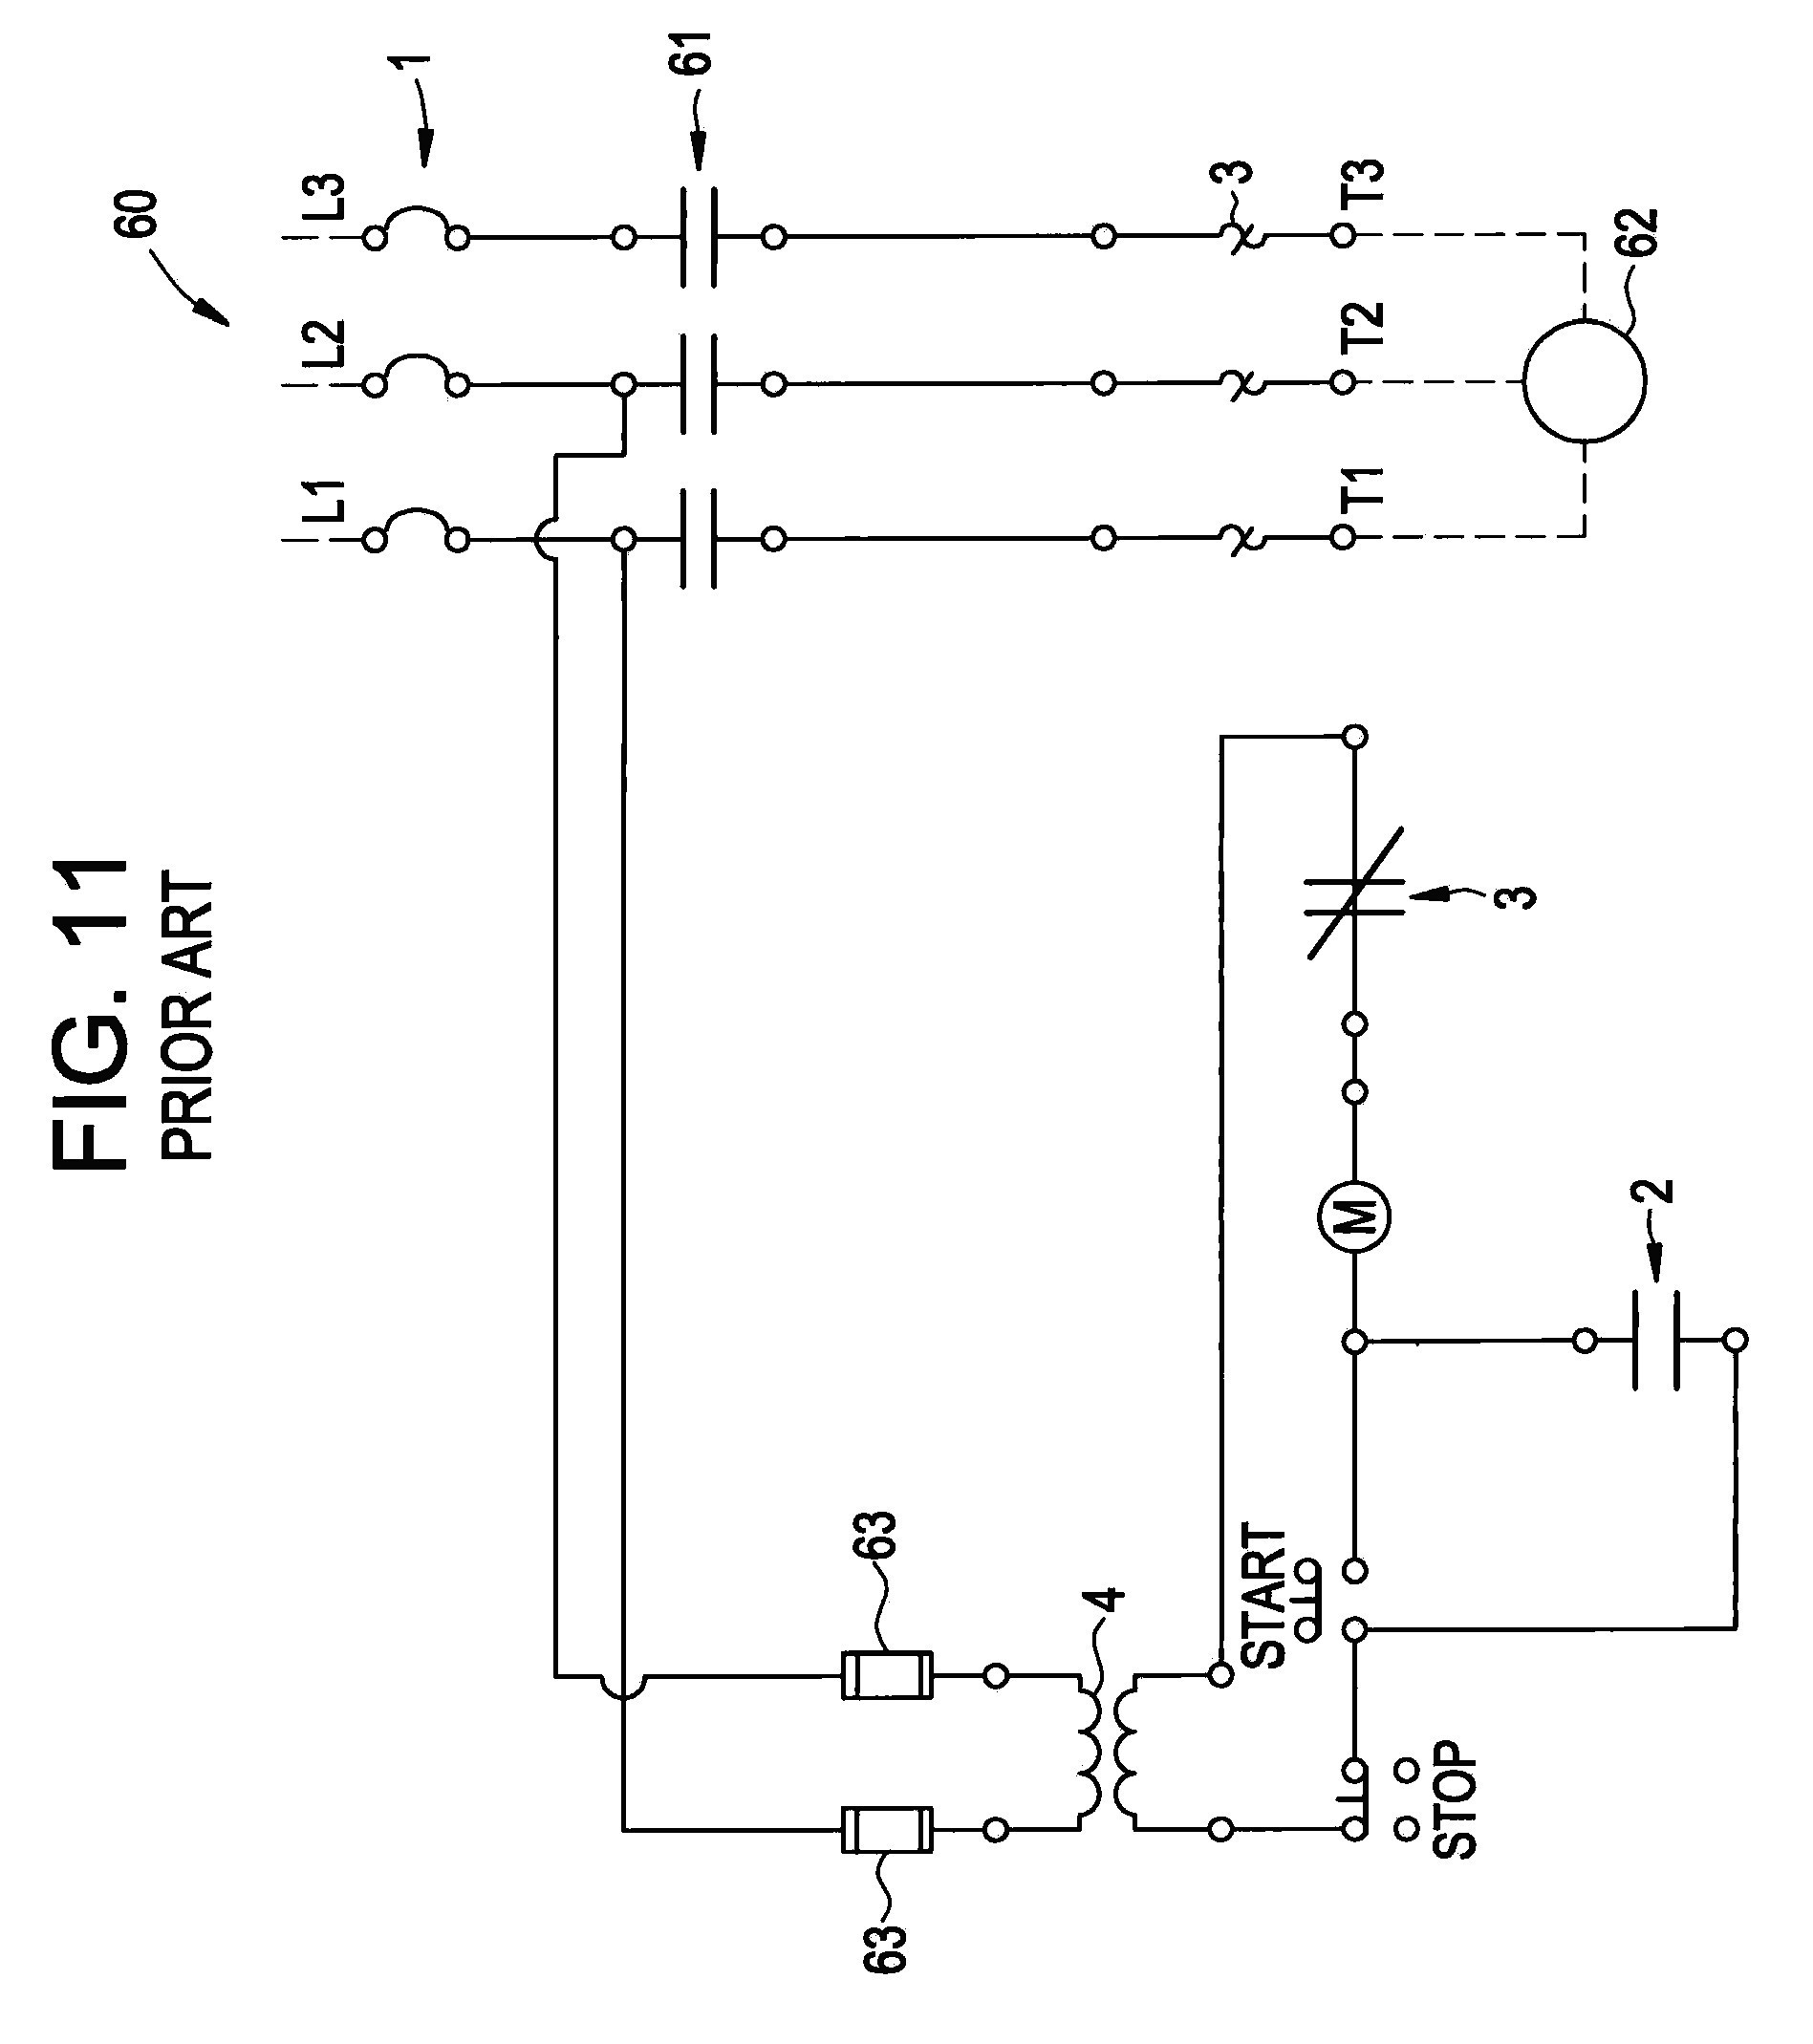 cutler hammer contactor wiring diagram valid wiring diagram rh uptuto HVAC Contactor Wiring Diagram Contactor Coil Wiring Diagram